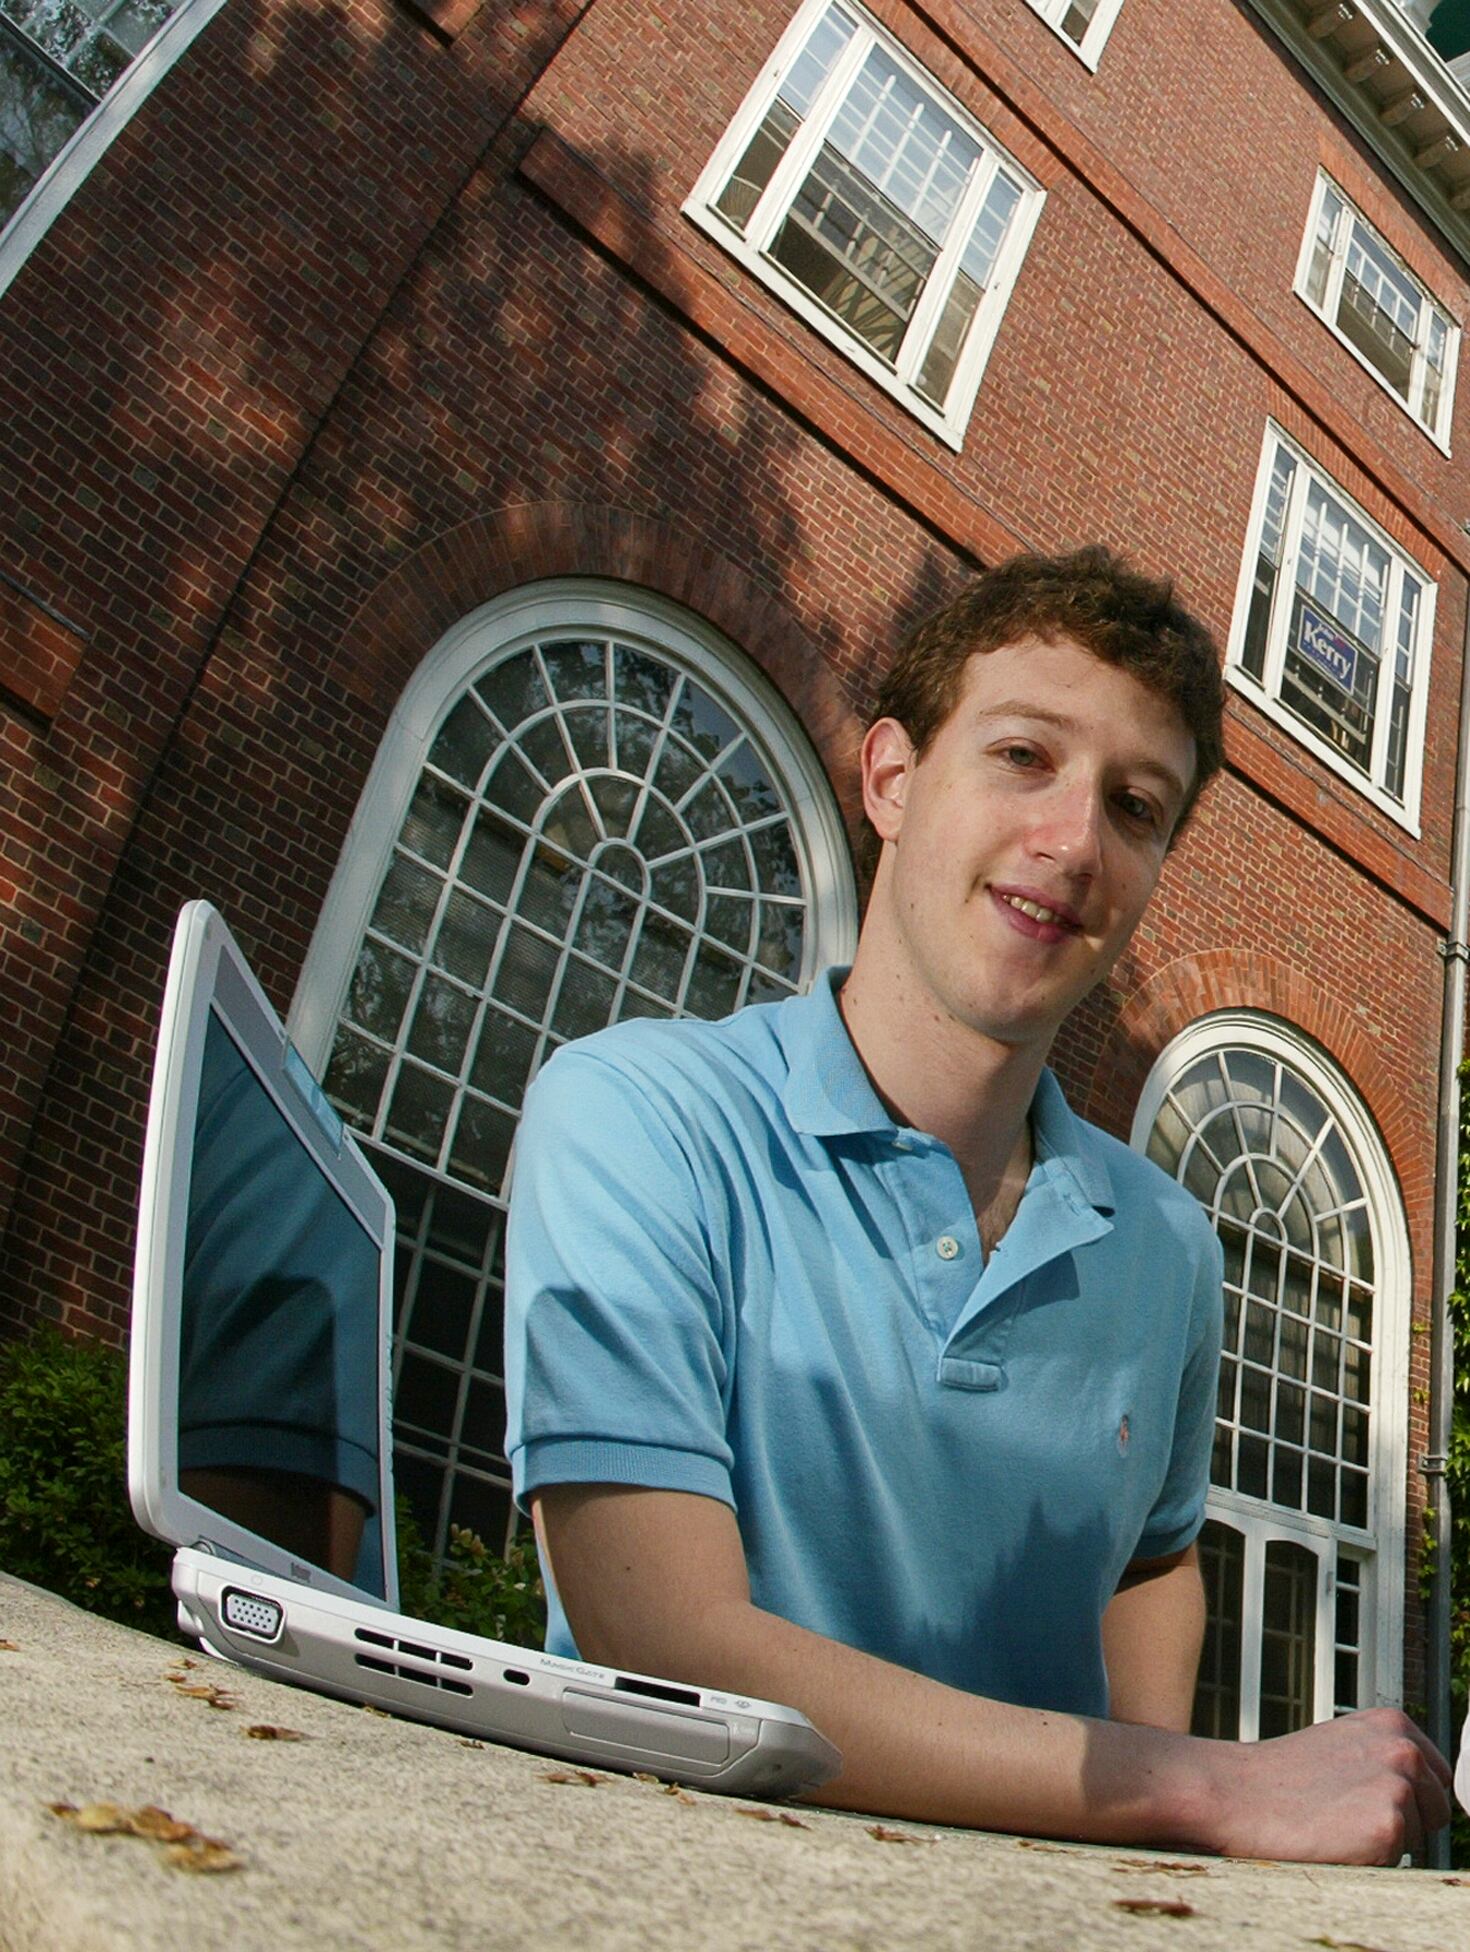 Mark Zuckerberg at Harvard University in May 2004, three months after founding Facebook.